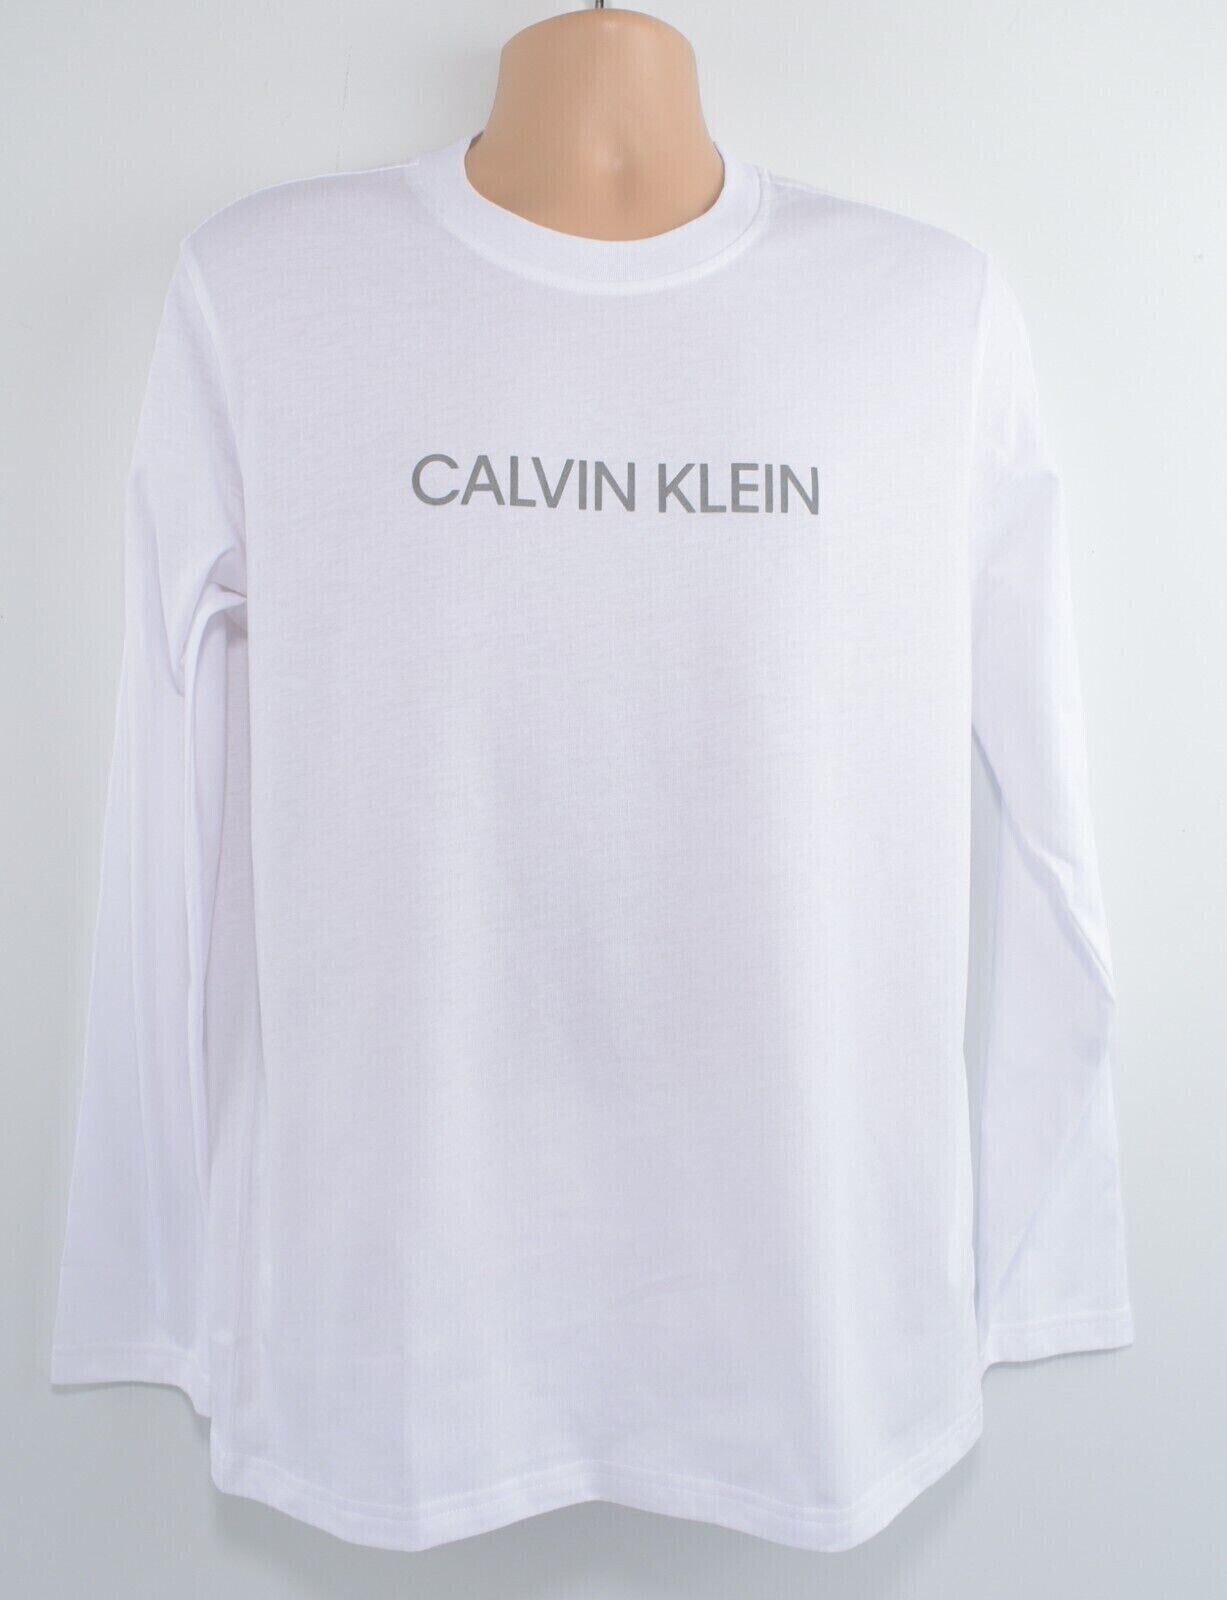 CALVIN KLEIN Performance Men's Long Sleeve T-shirt Top, Bright White, size L